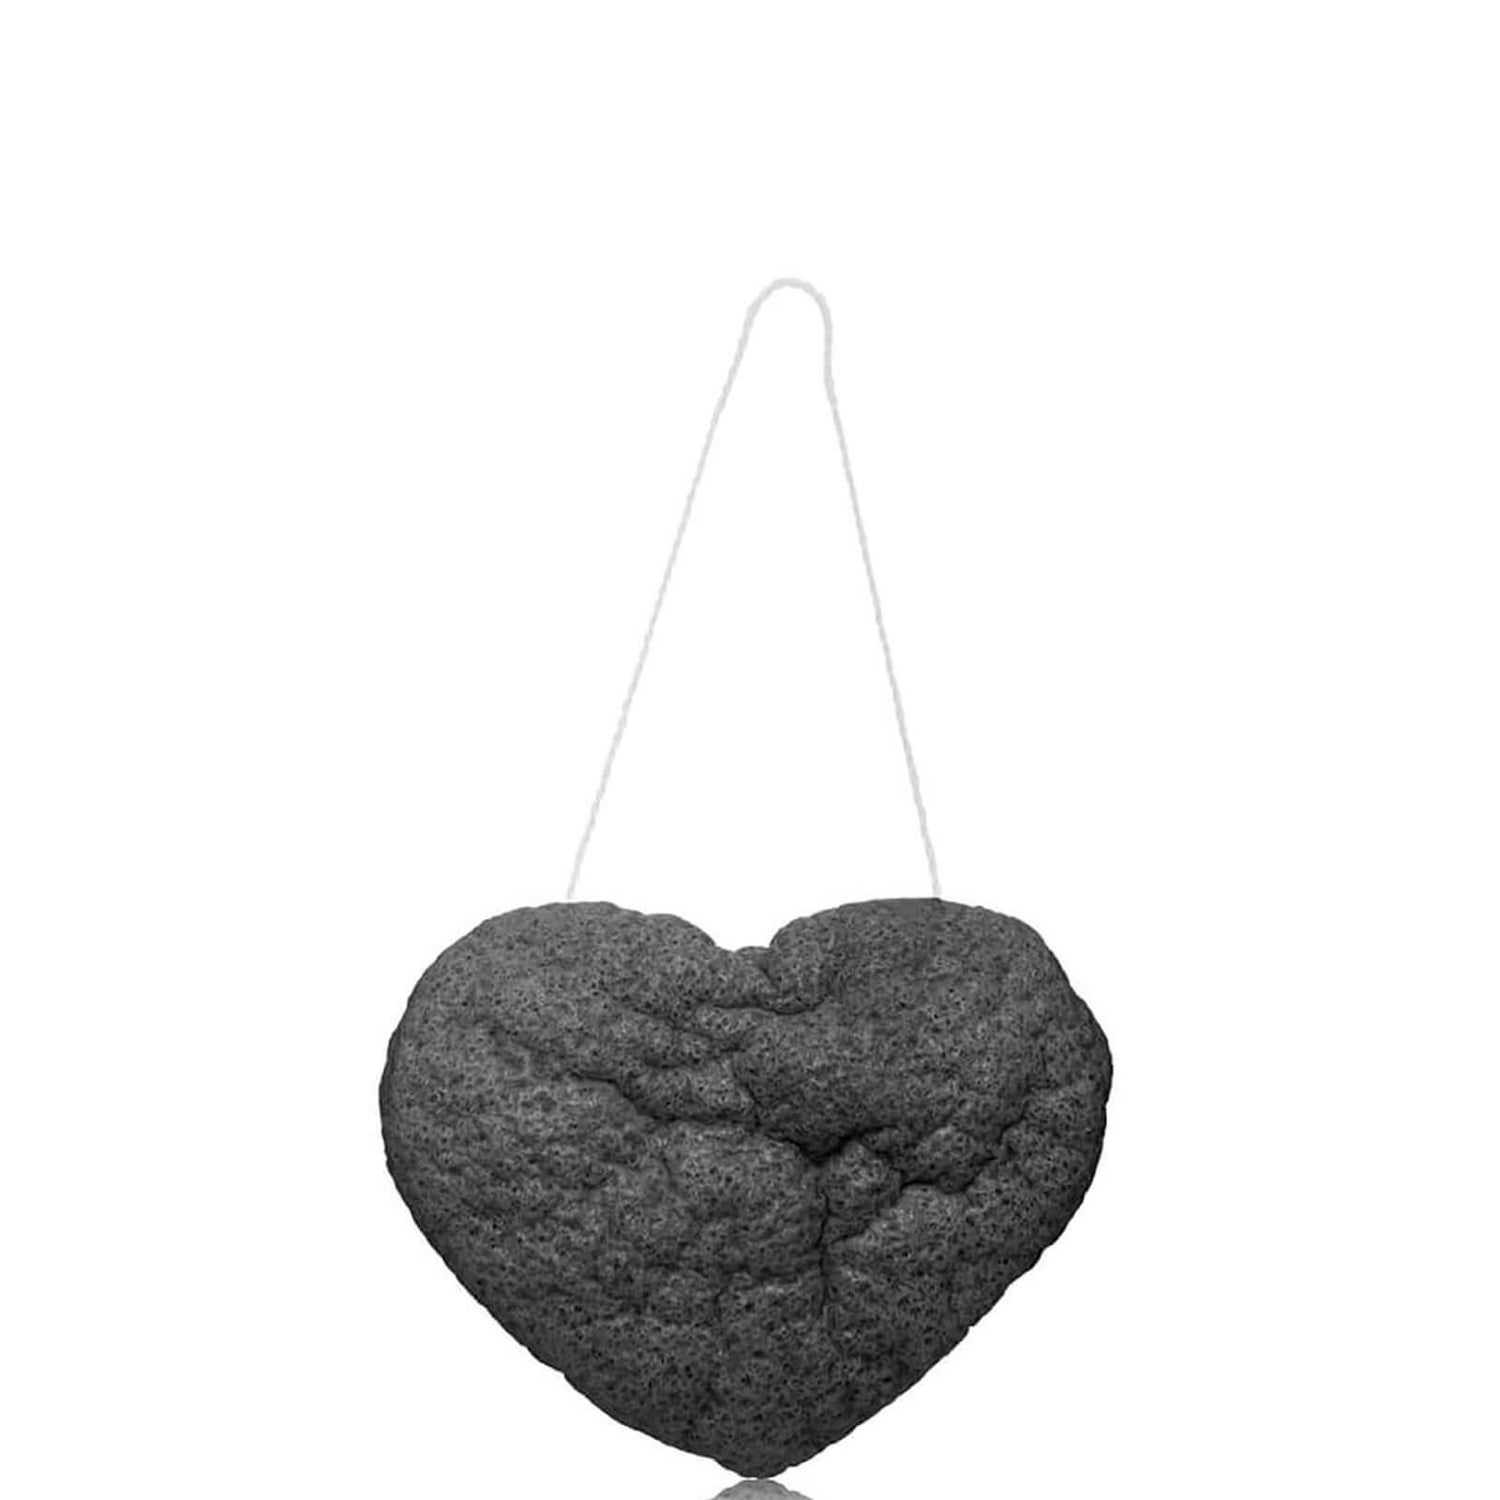 One Love Organics The Cleansing Sponge - Charcoal Heart Shape (1 piece)